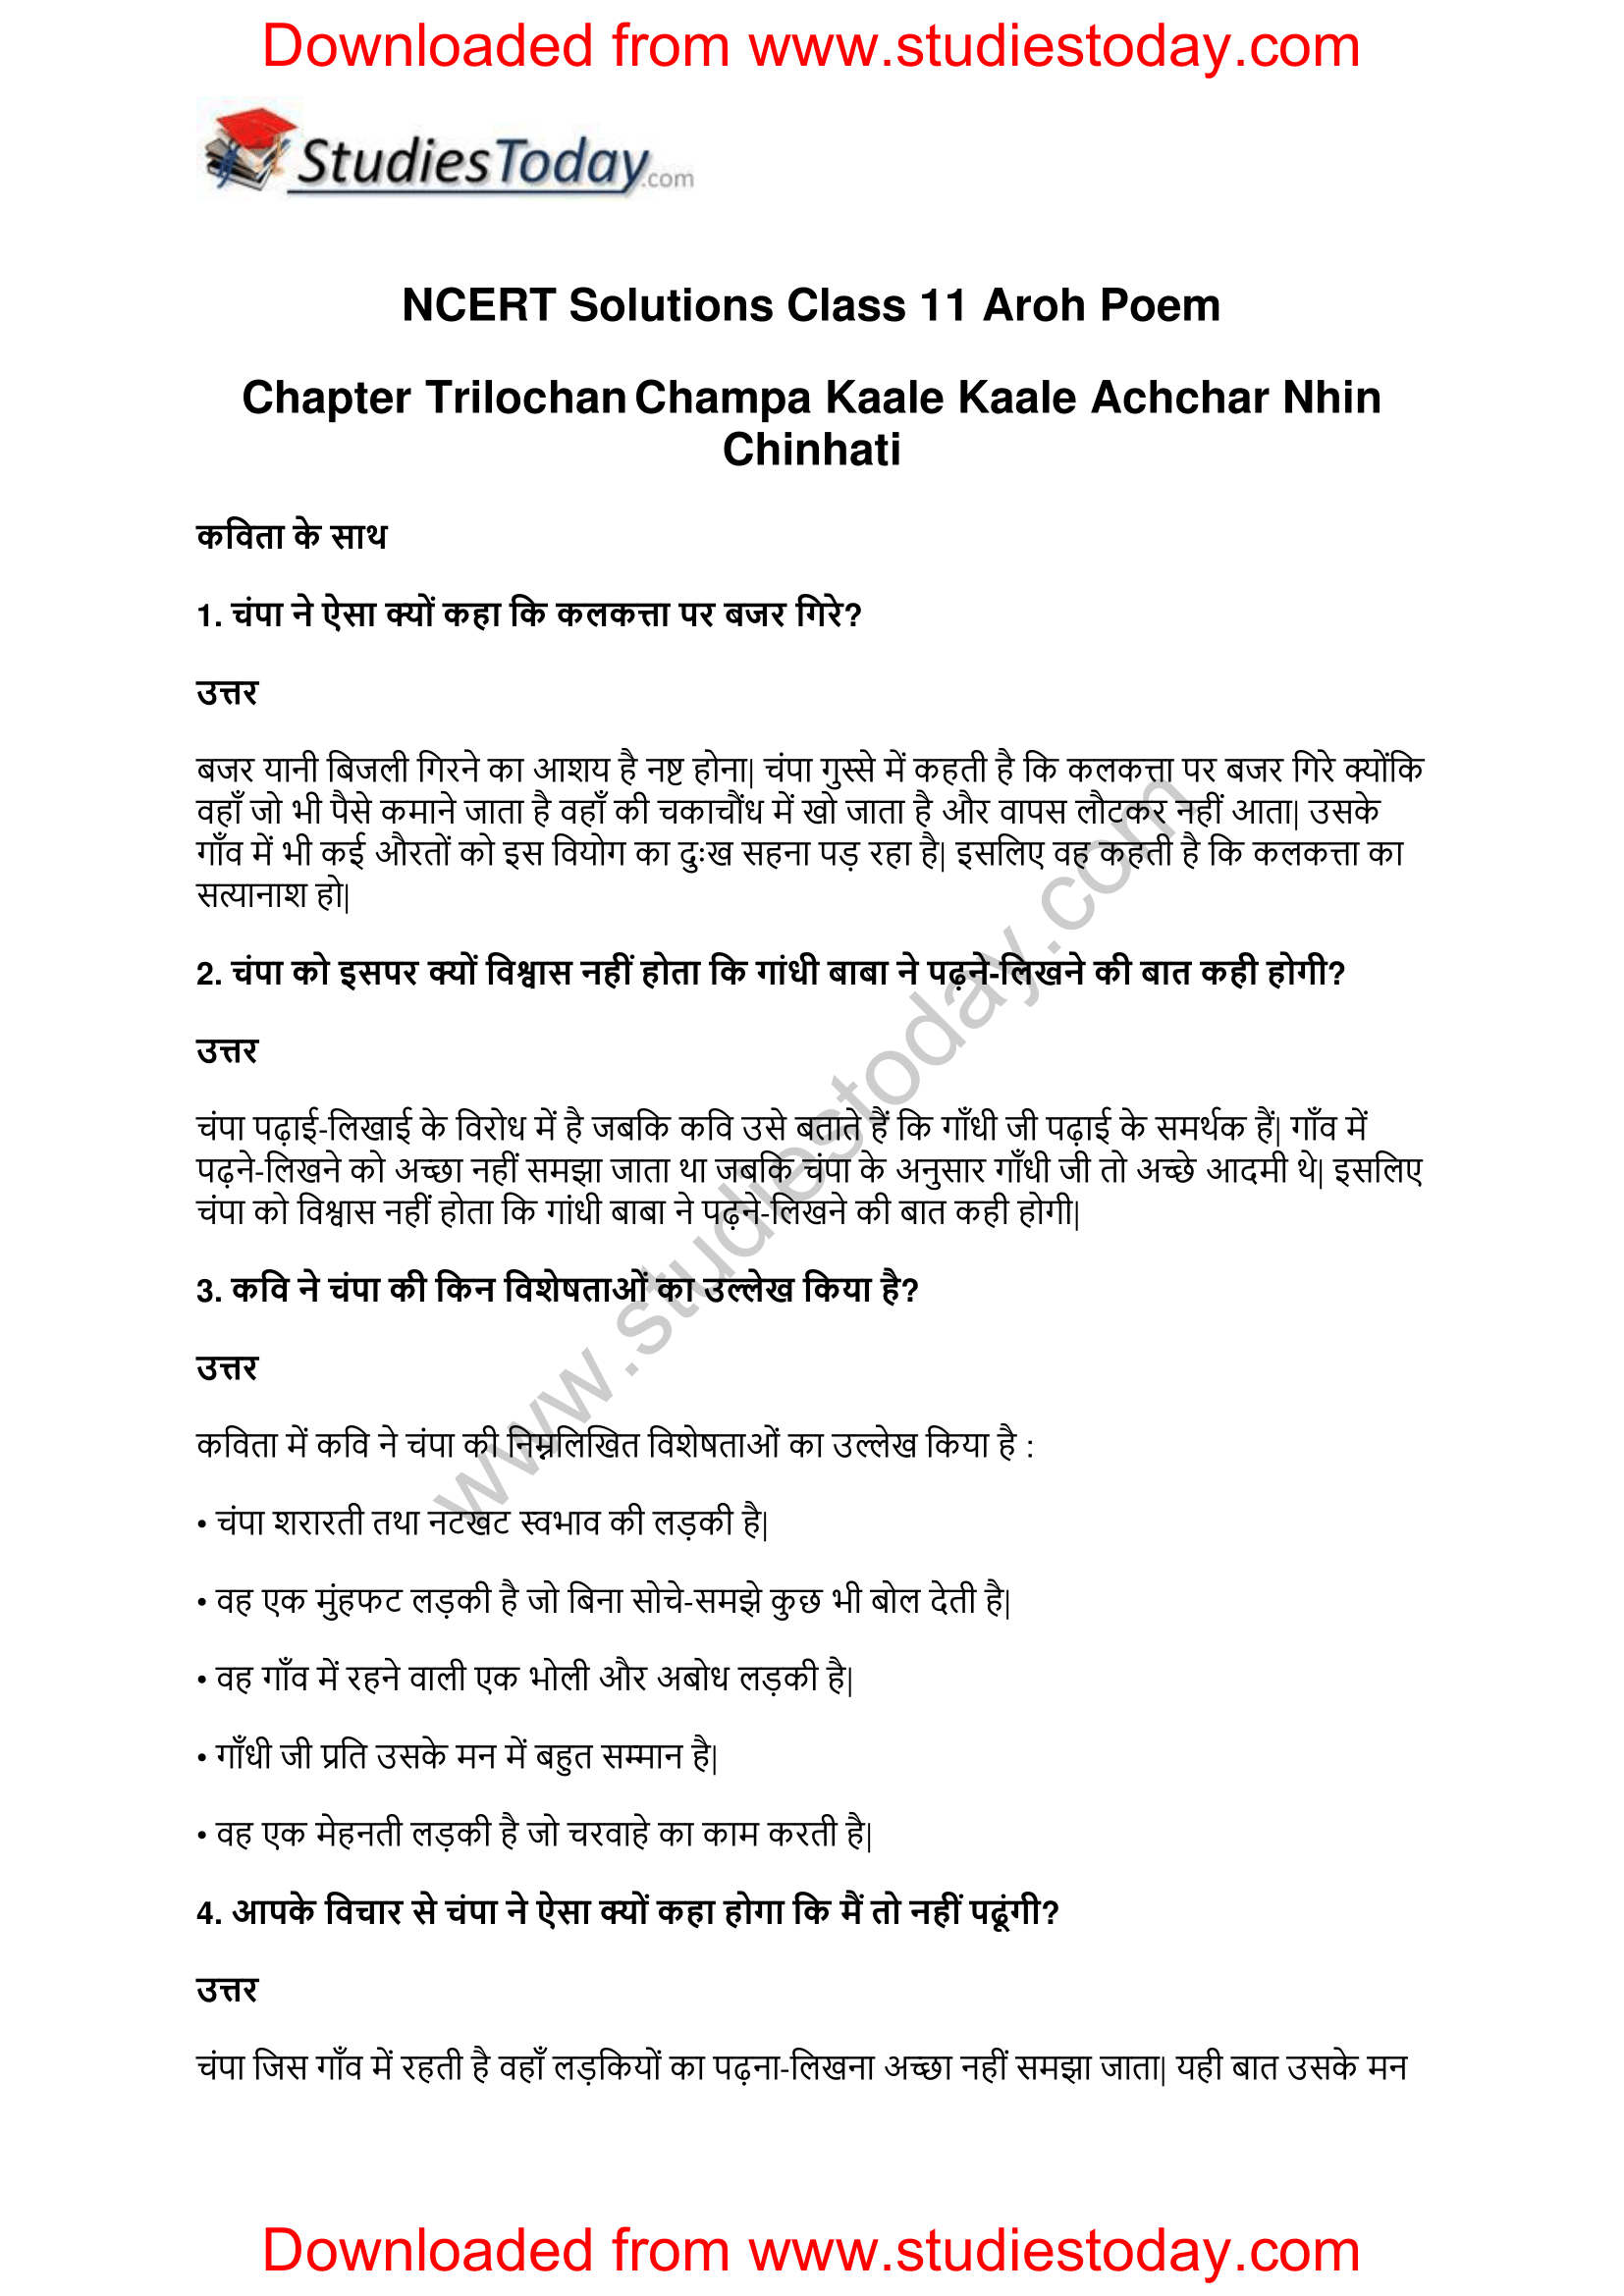 NCERT-Solutions-Class-11-Hindi-Aroh-Poem-Trilochan-1